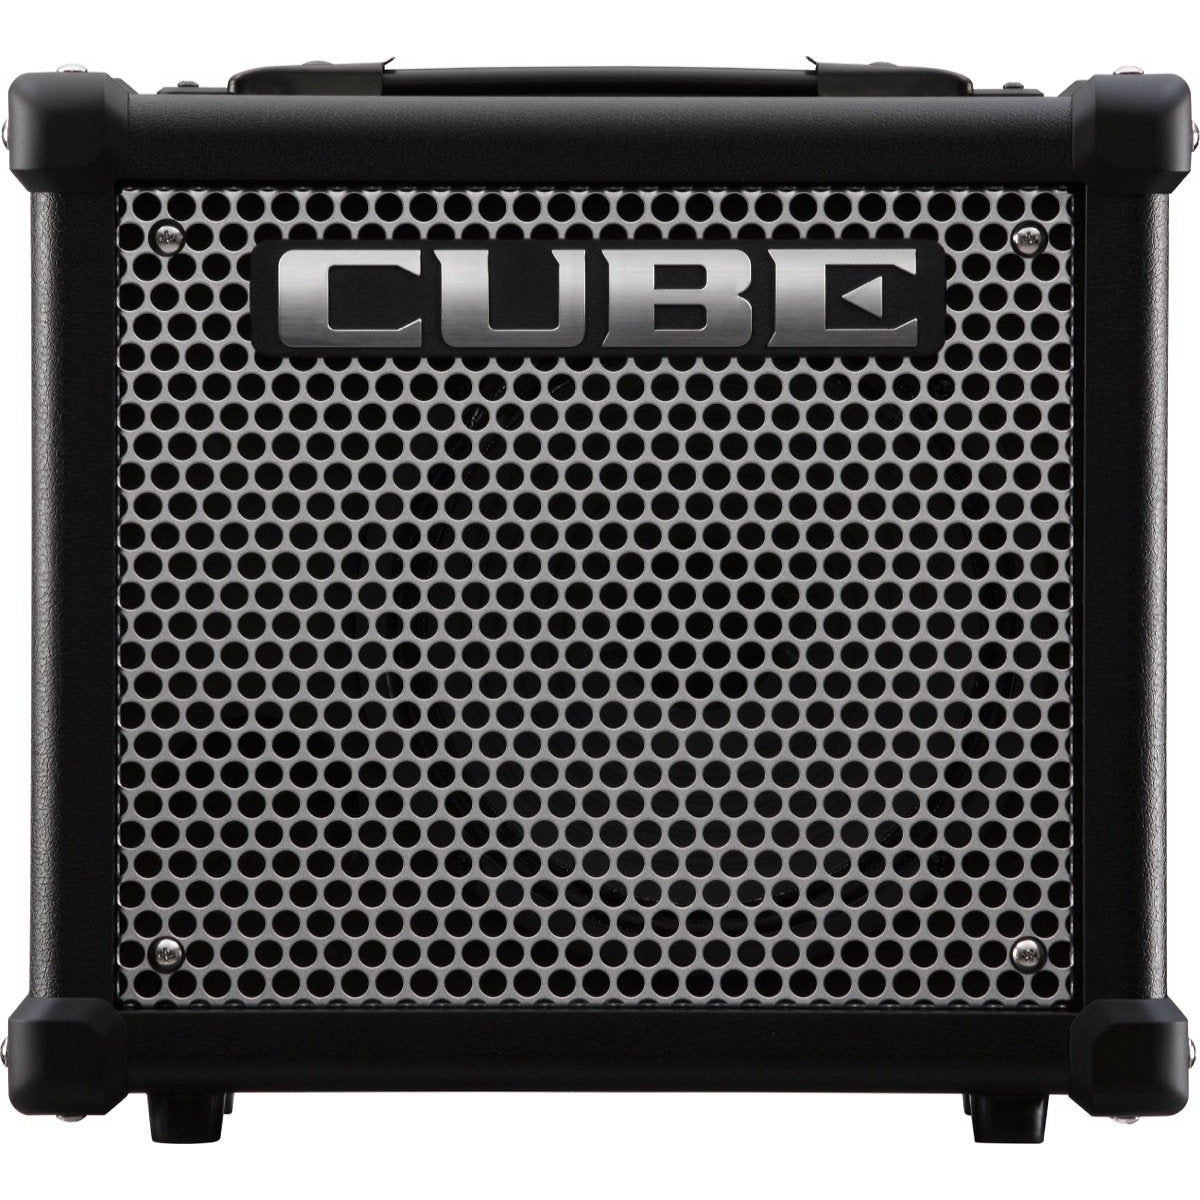 Roland CUBE 10GX Guitar Combo Amplifier